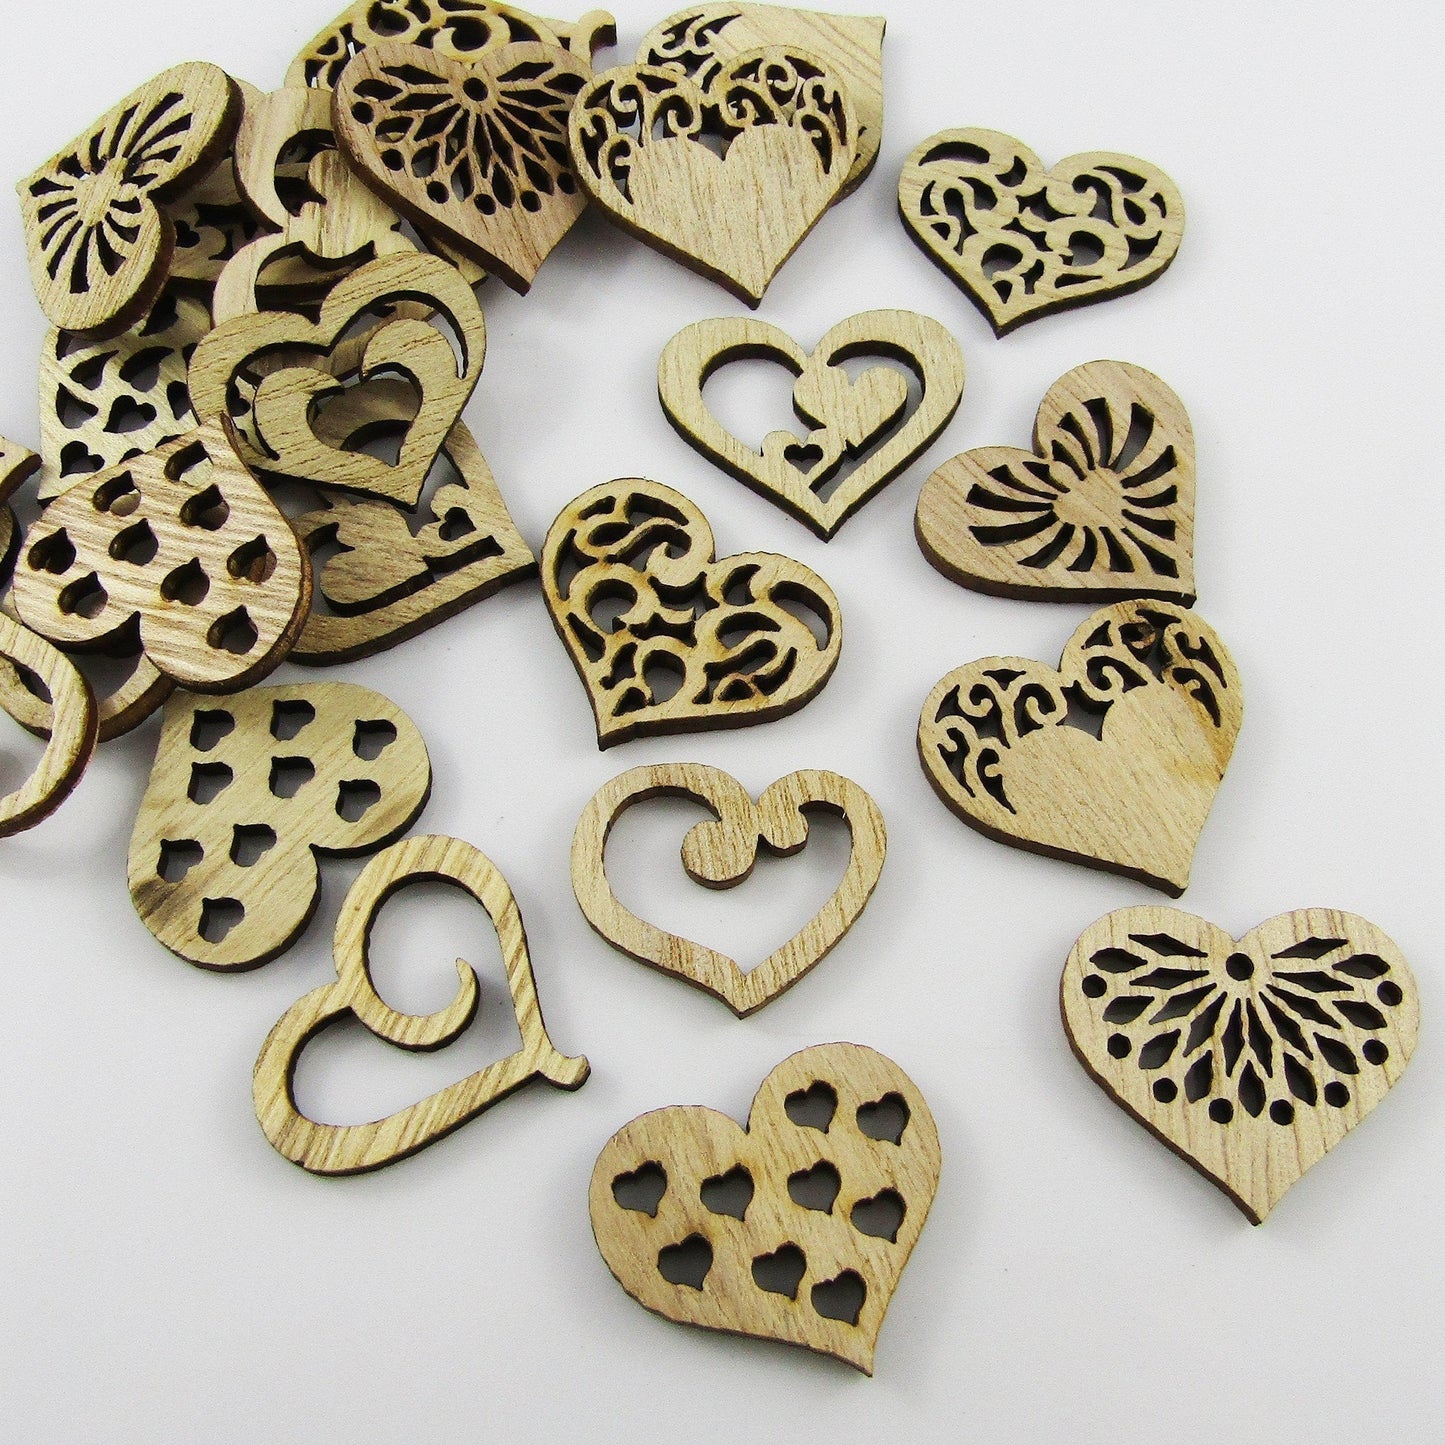 20pcs Laser Cut Wood Mixed Love Hearts Embellishment Scrapbooking Cards & More!